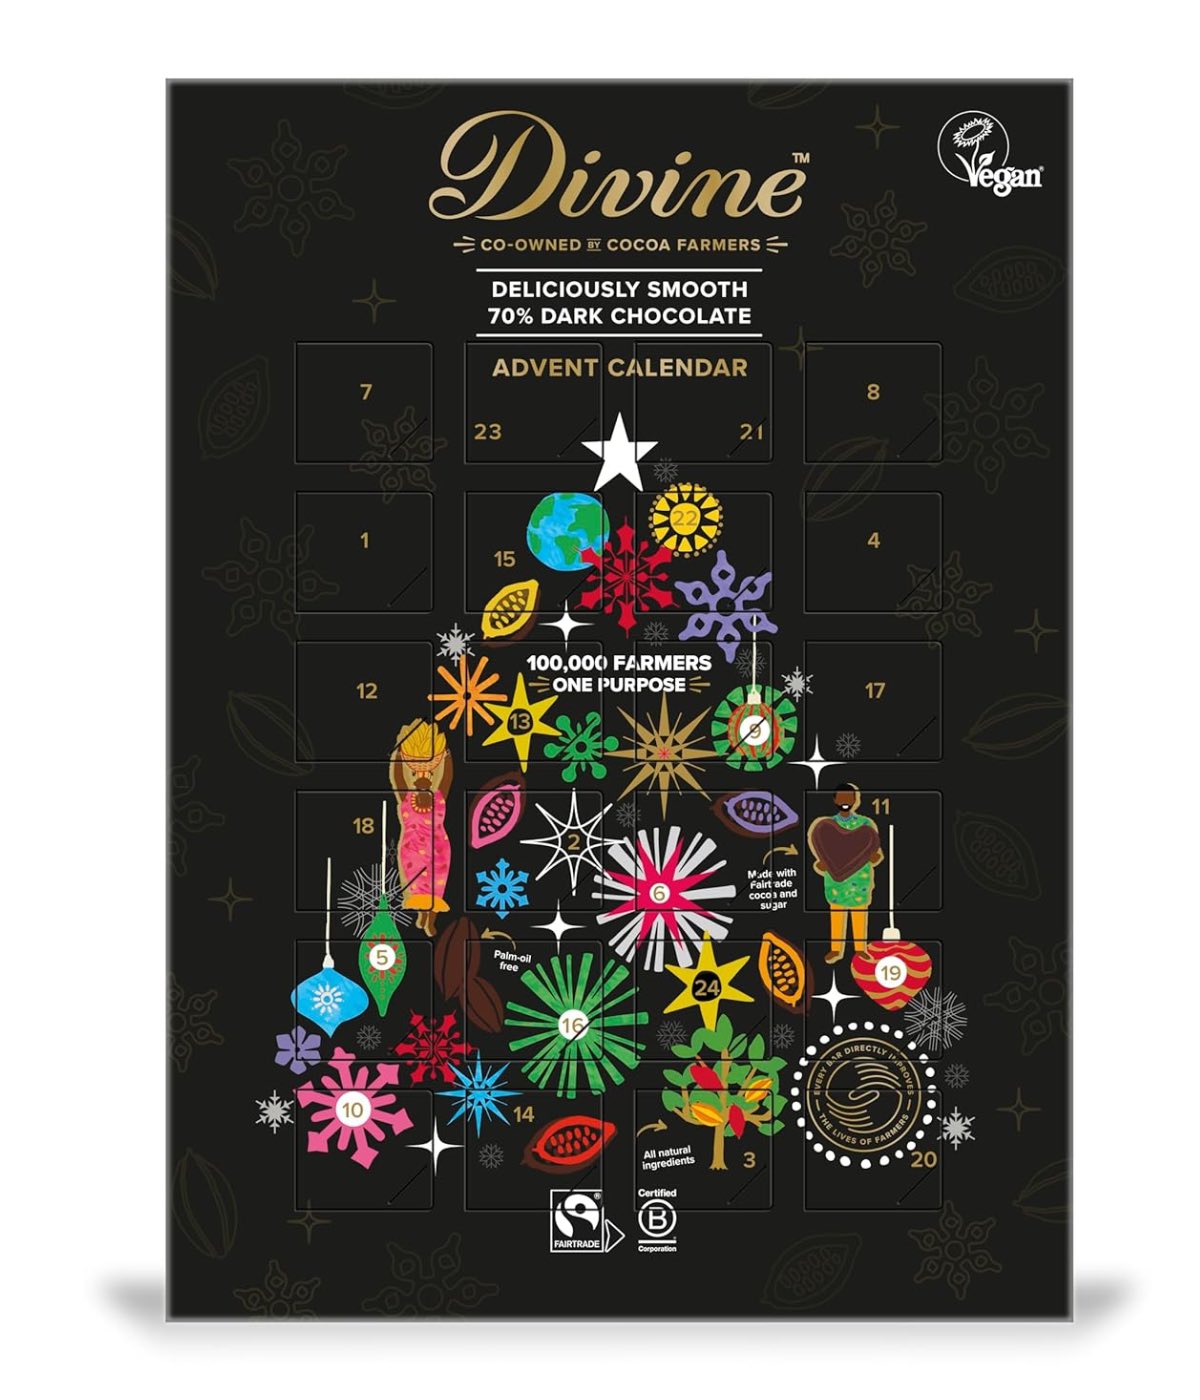 Classy adult advent calendar from Divine chocolates featuring dark chocolate. 